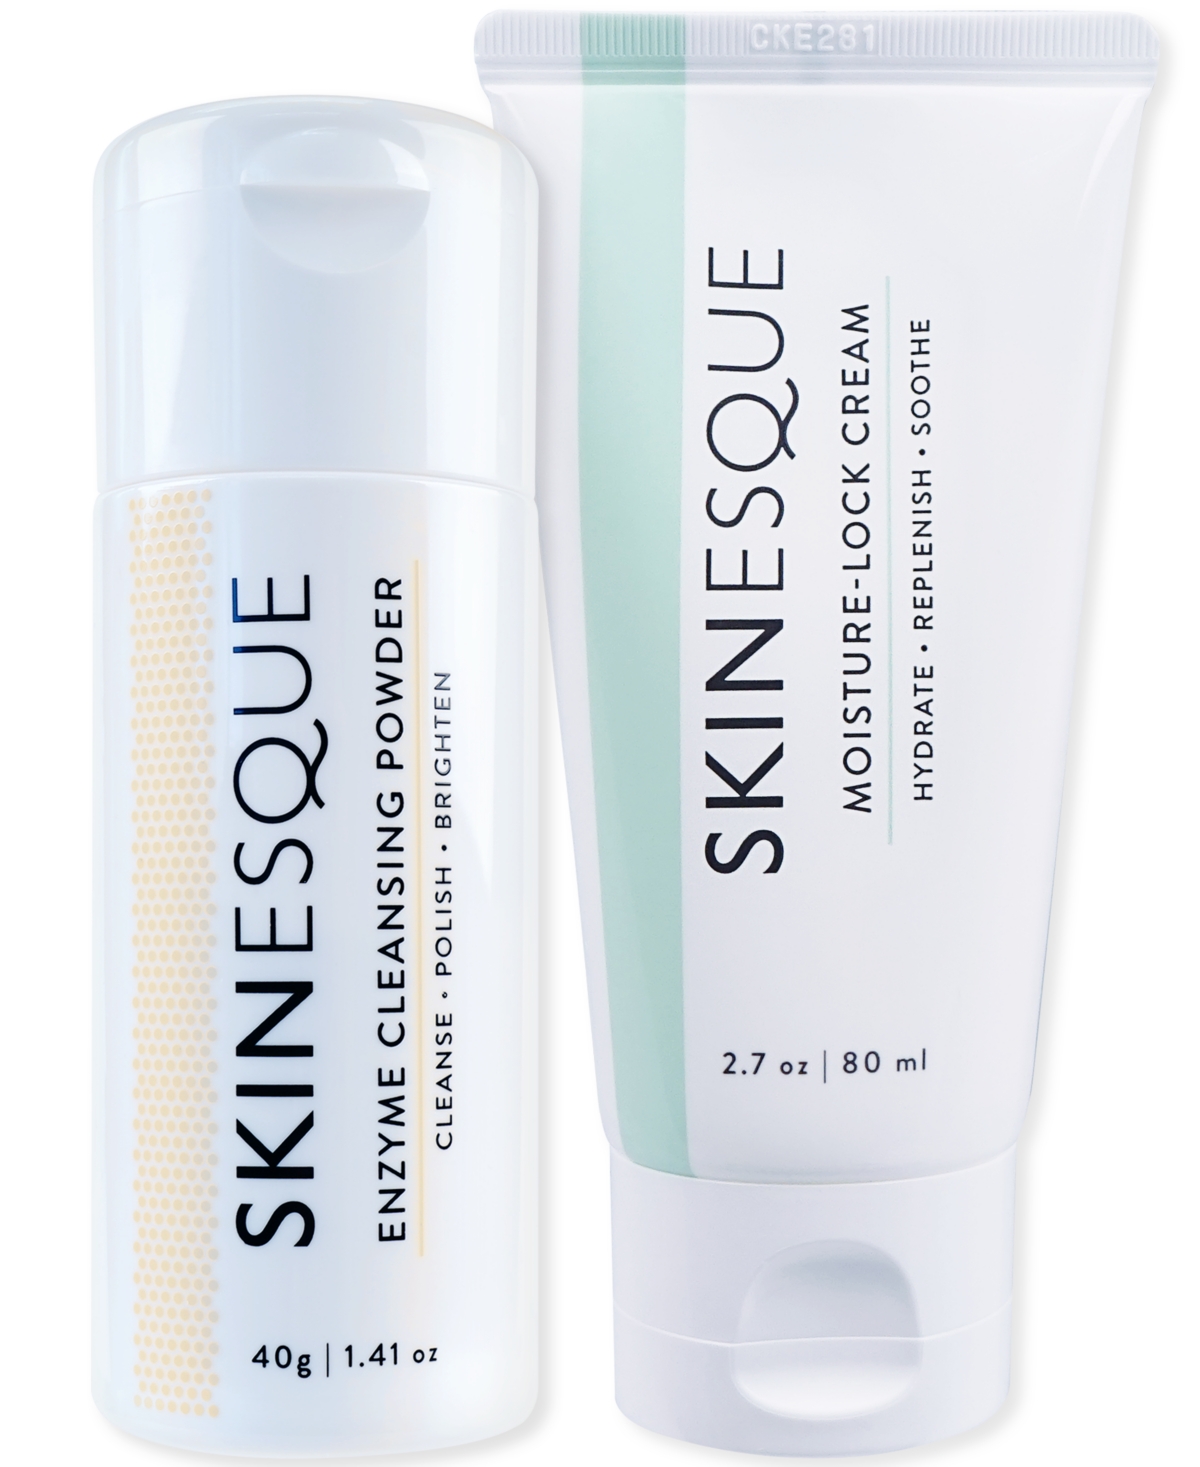 The Skinesque Essentials: Enzyme Cleansing Powder, Moisture Lock Cream, Set of 2